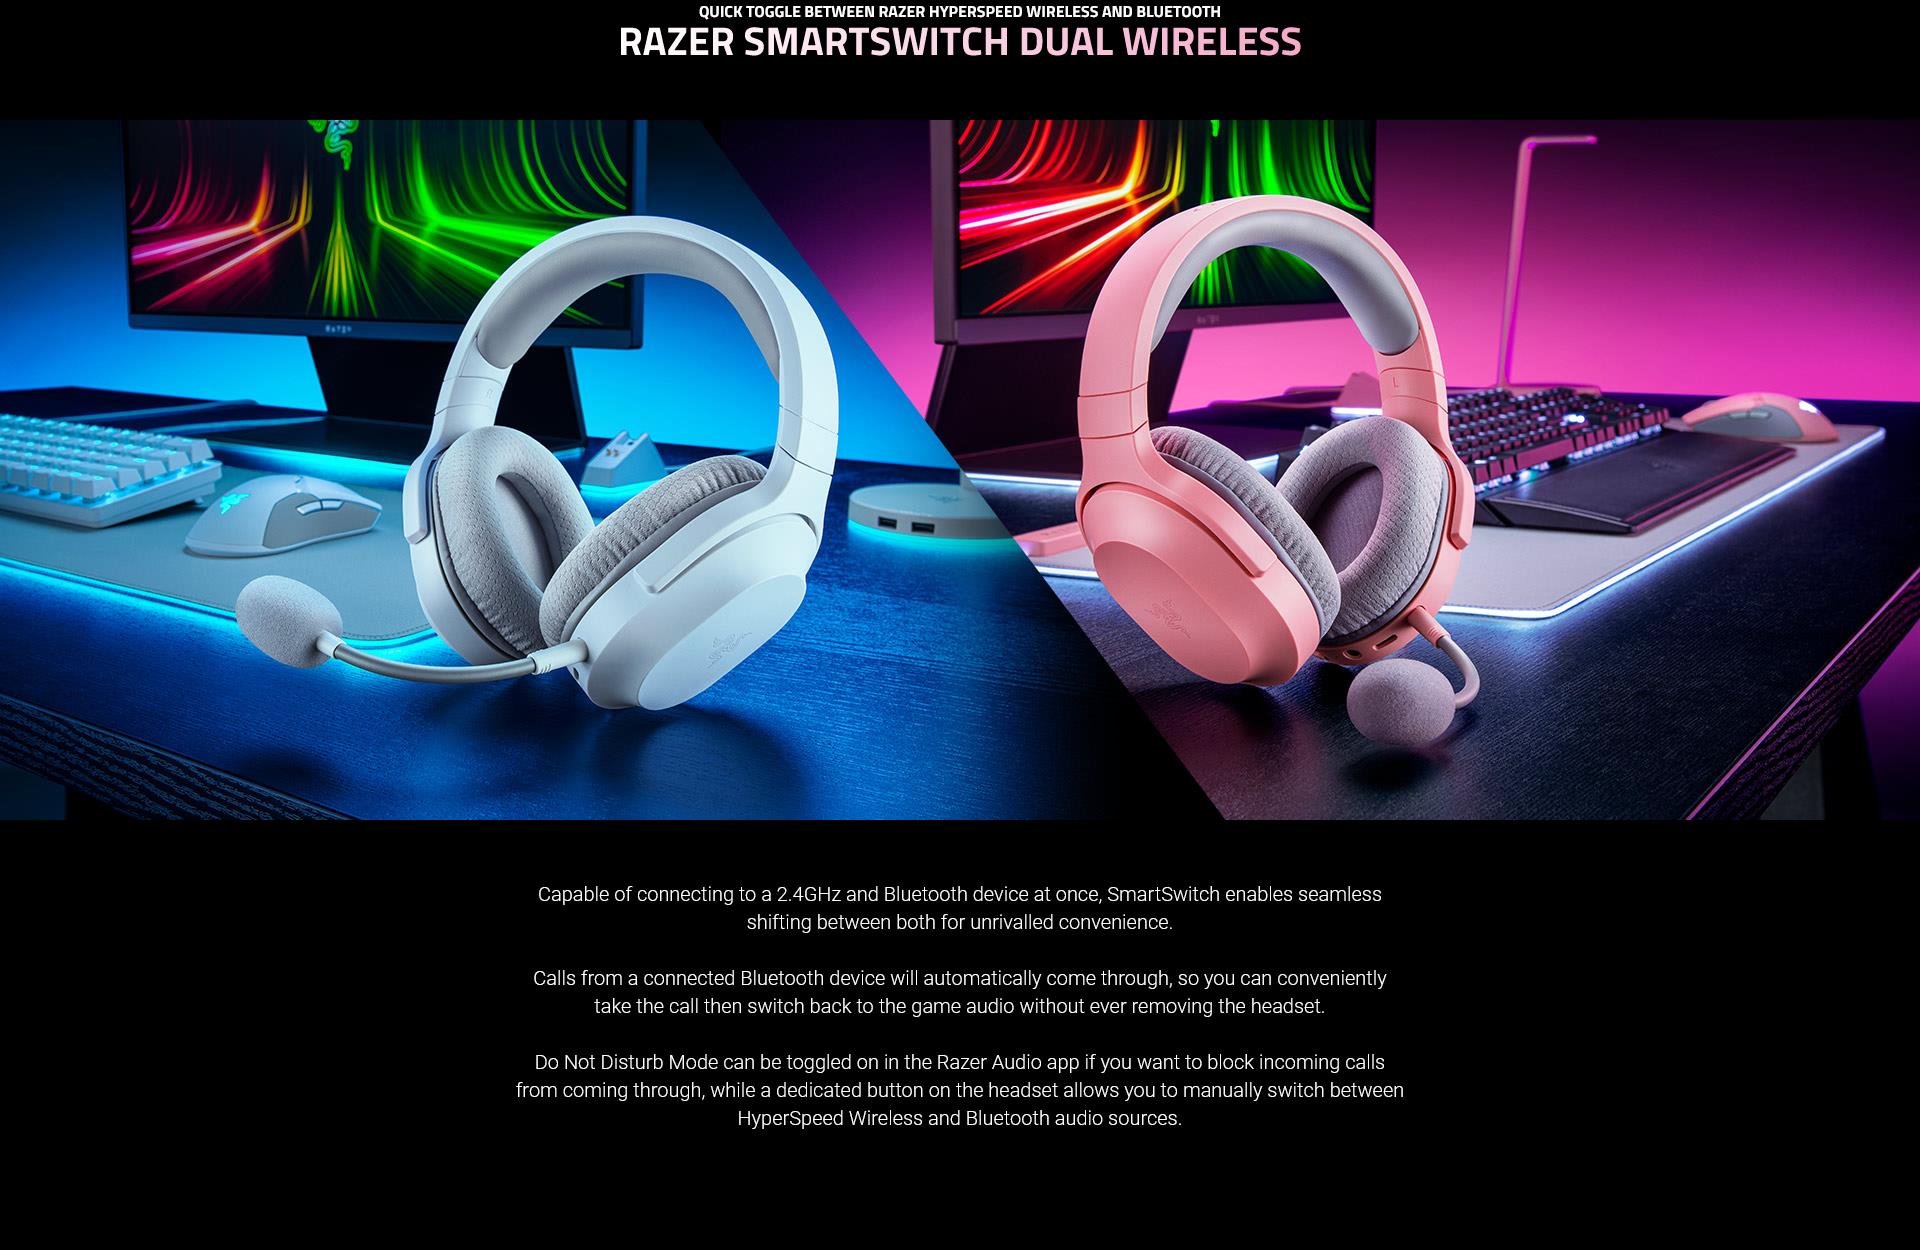 Razer Barracuda X Wireless Multi-Platform Gaming and Mobile Headset,  2.4GHz, Mercury 